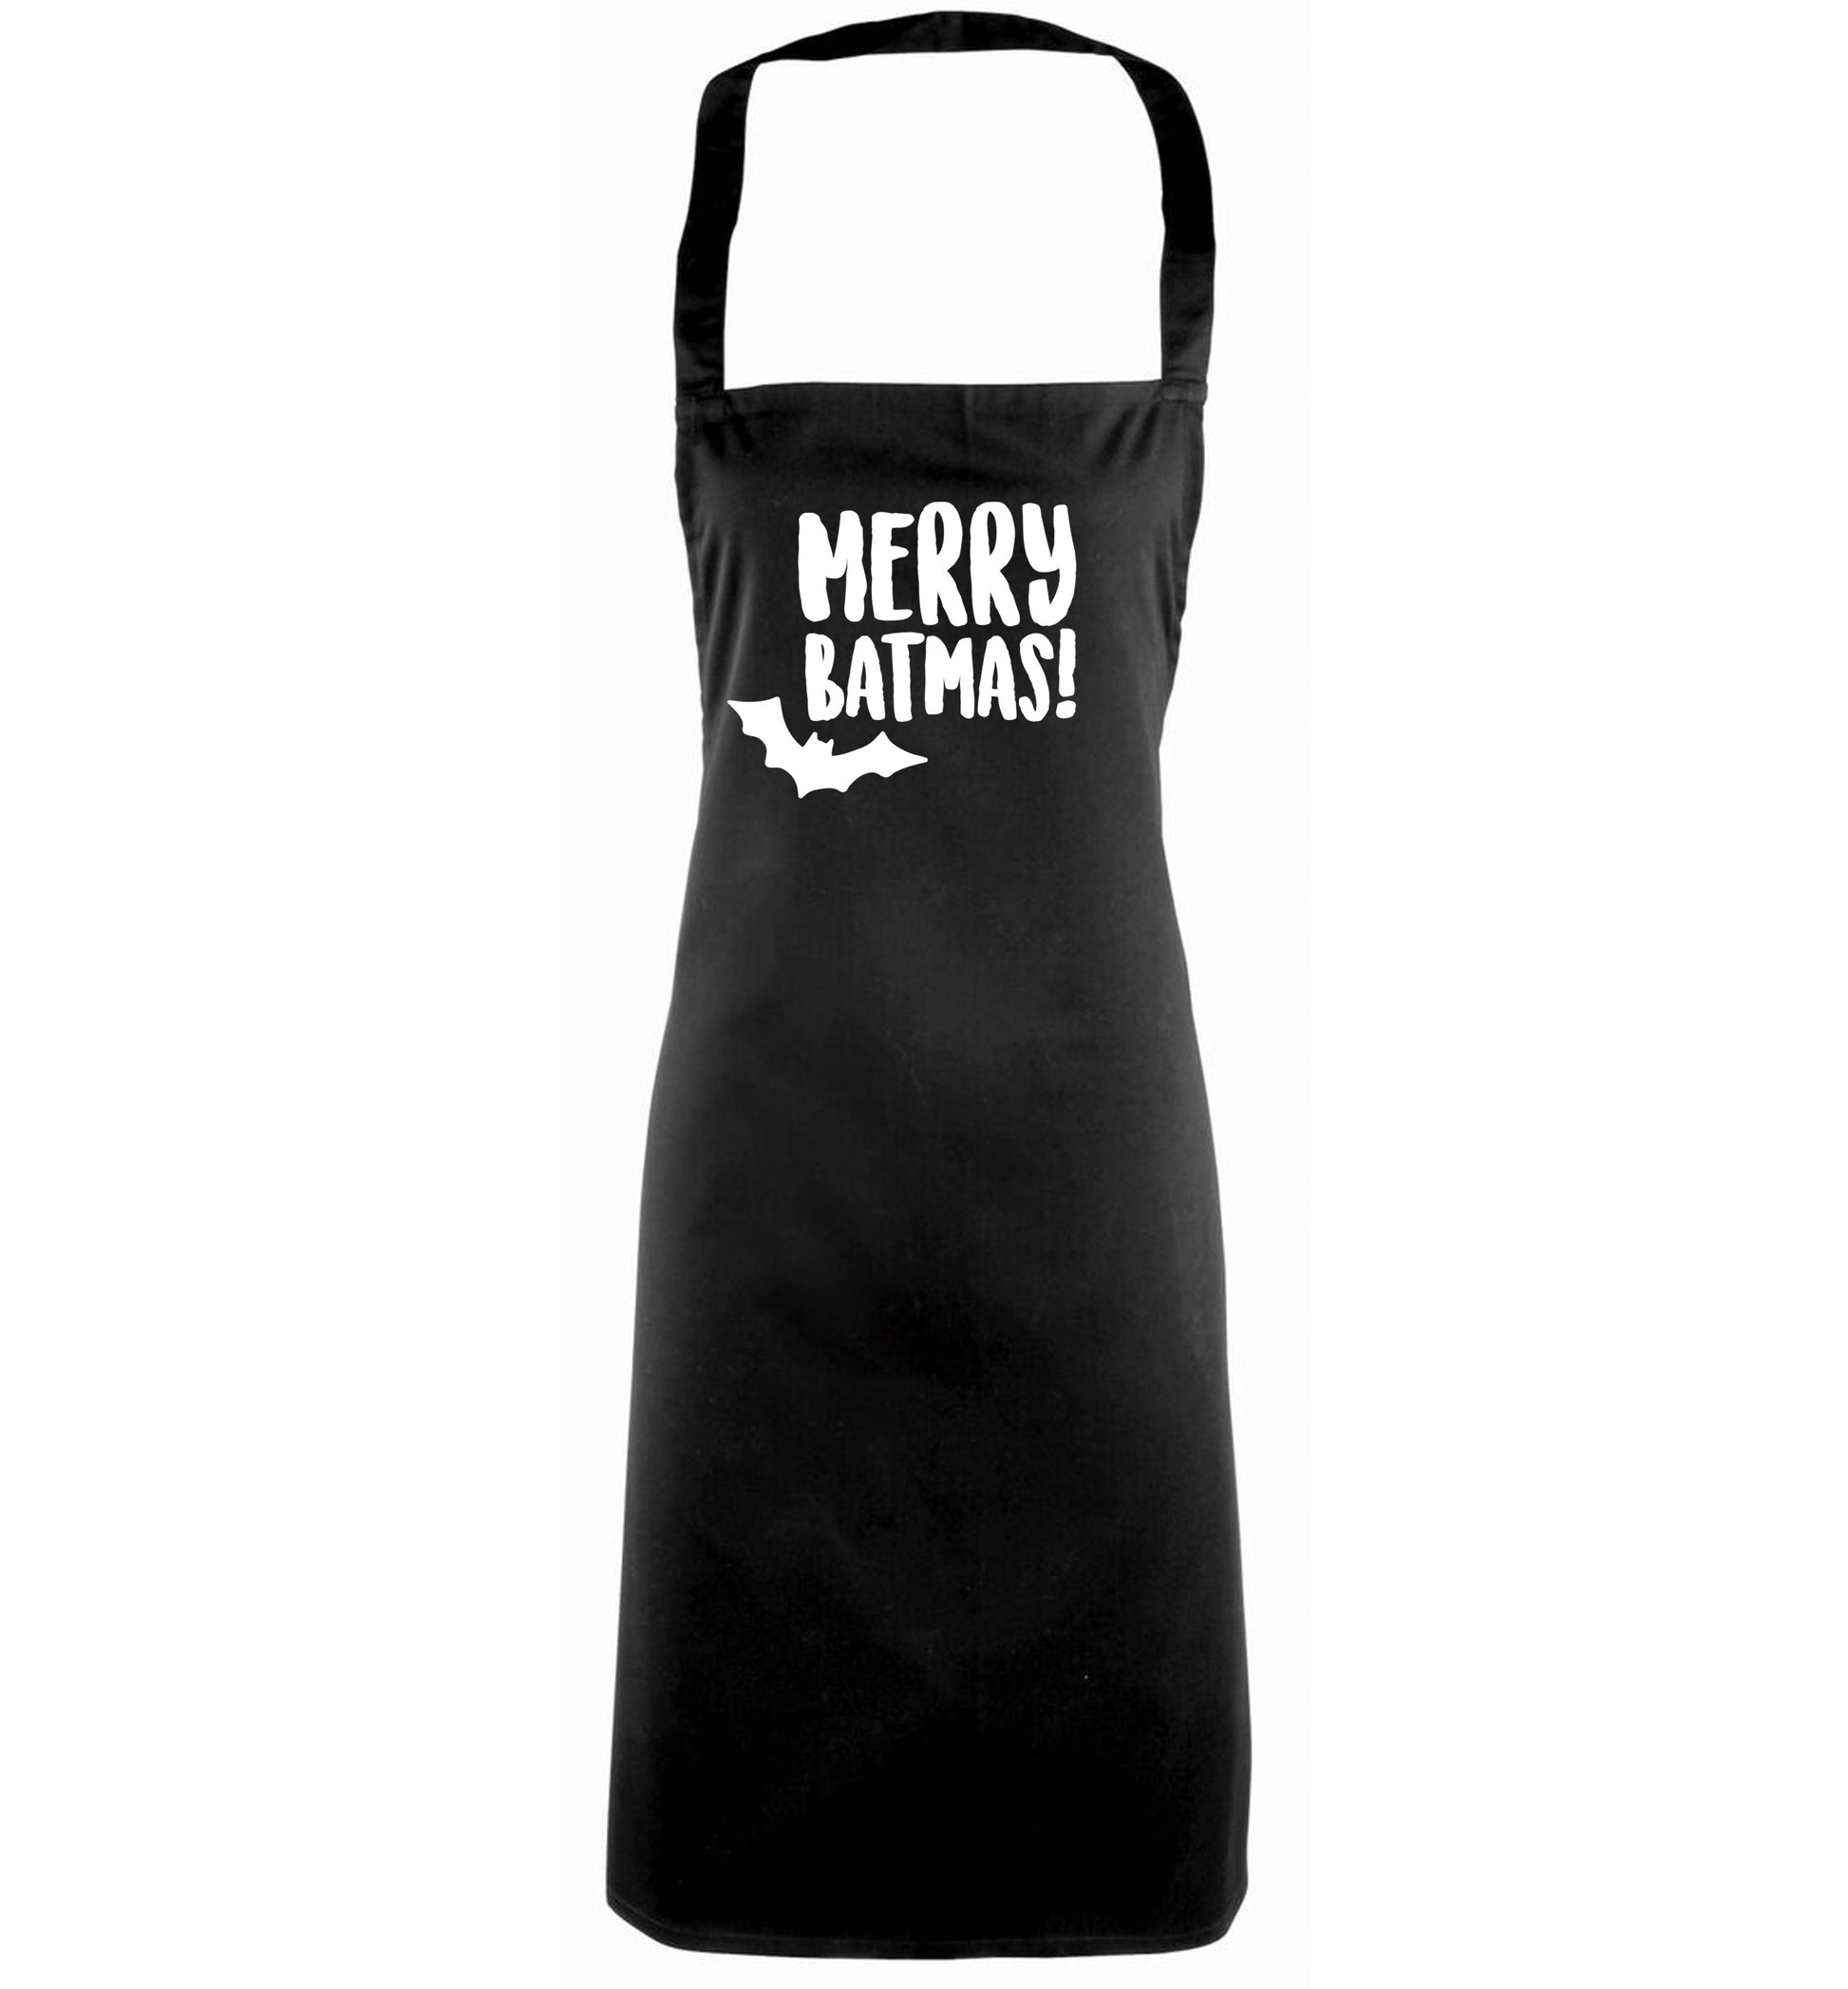 Merry Batmas black apron